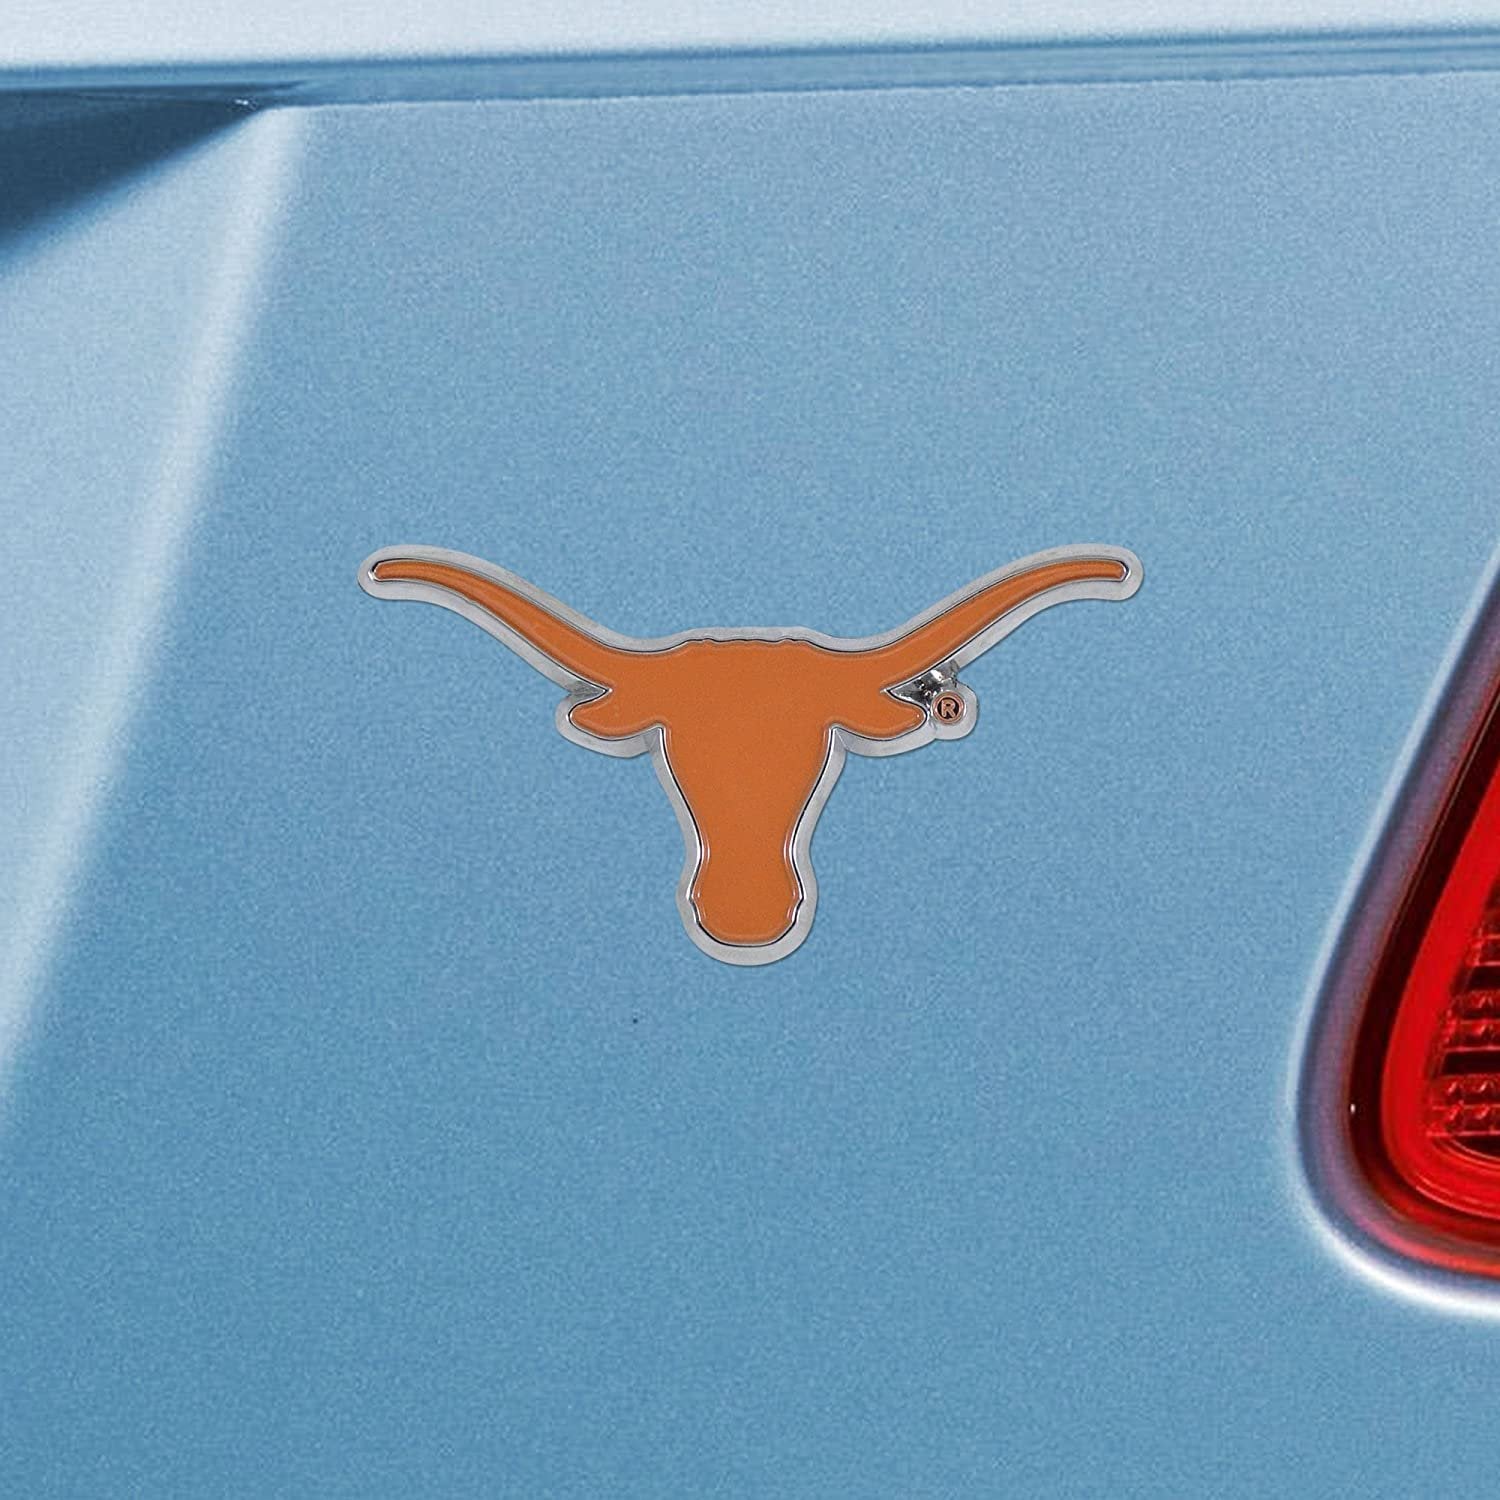 University of Texas Longhorns Premium Solid Metal Raised Auto Emblem, Shape Cut, Adhesive Backing